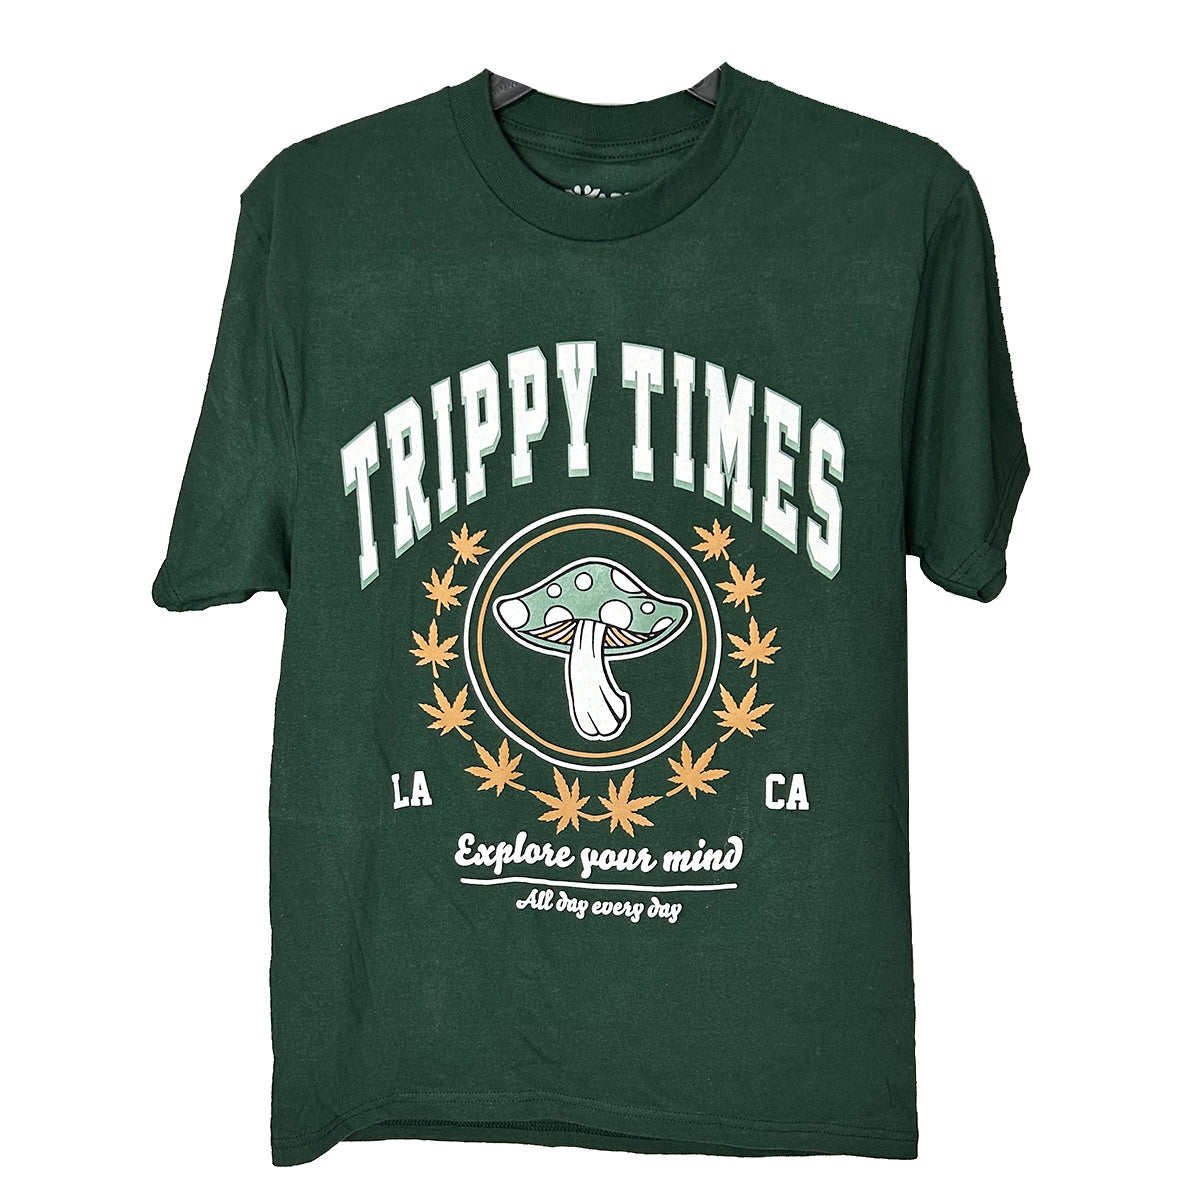 Trippy Times - Pack of 6 Units  1S, 2M, 2L, 1XL